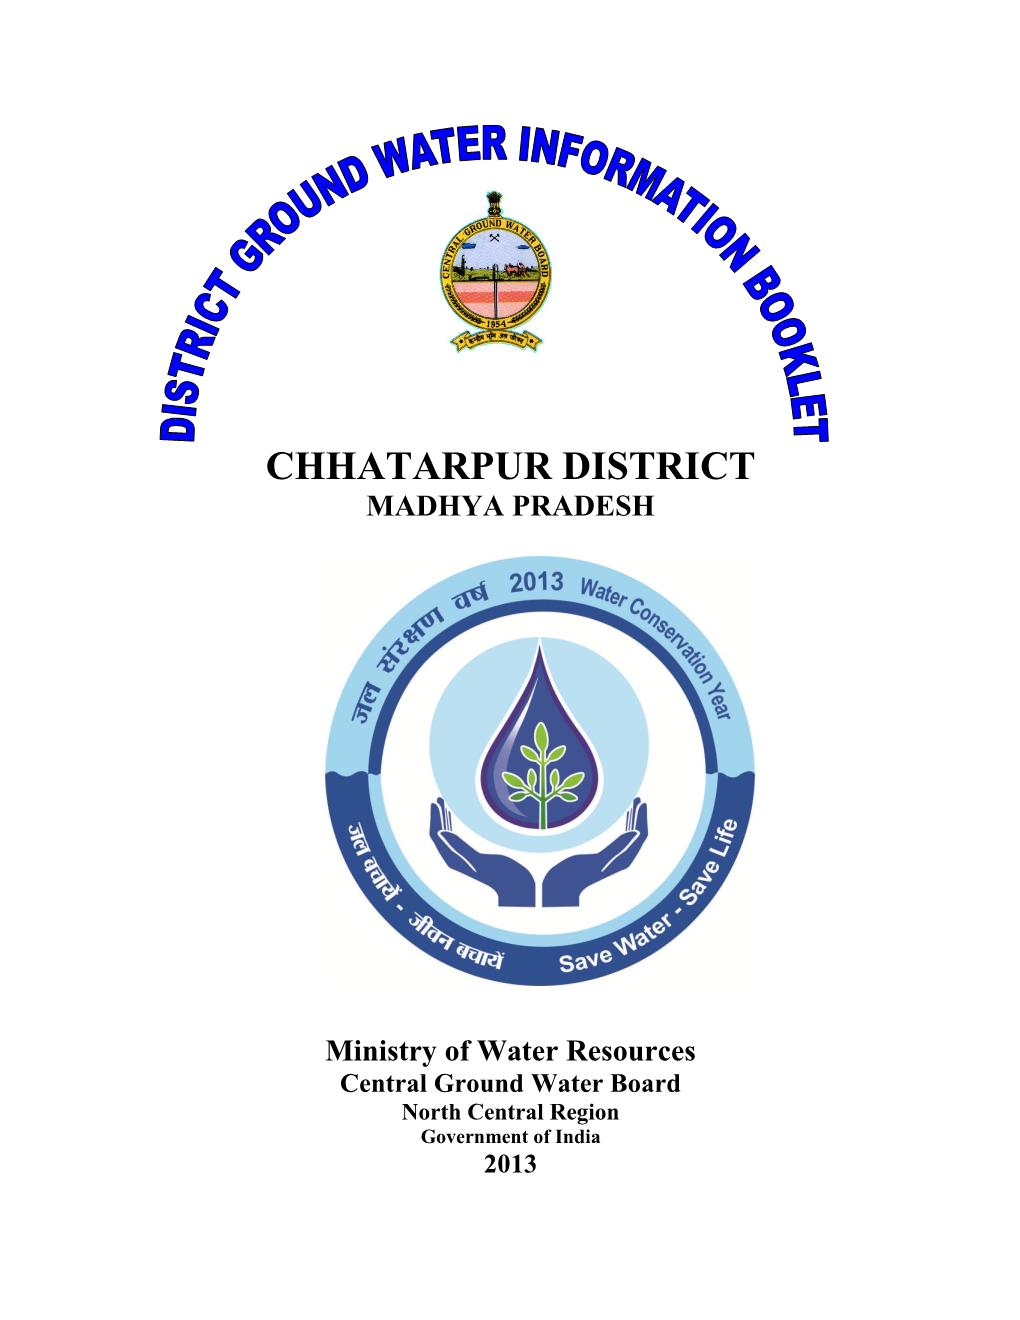 Chhatarpur District Madhya Pradesh